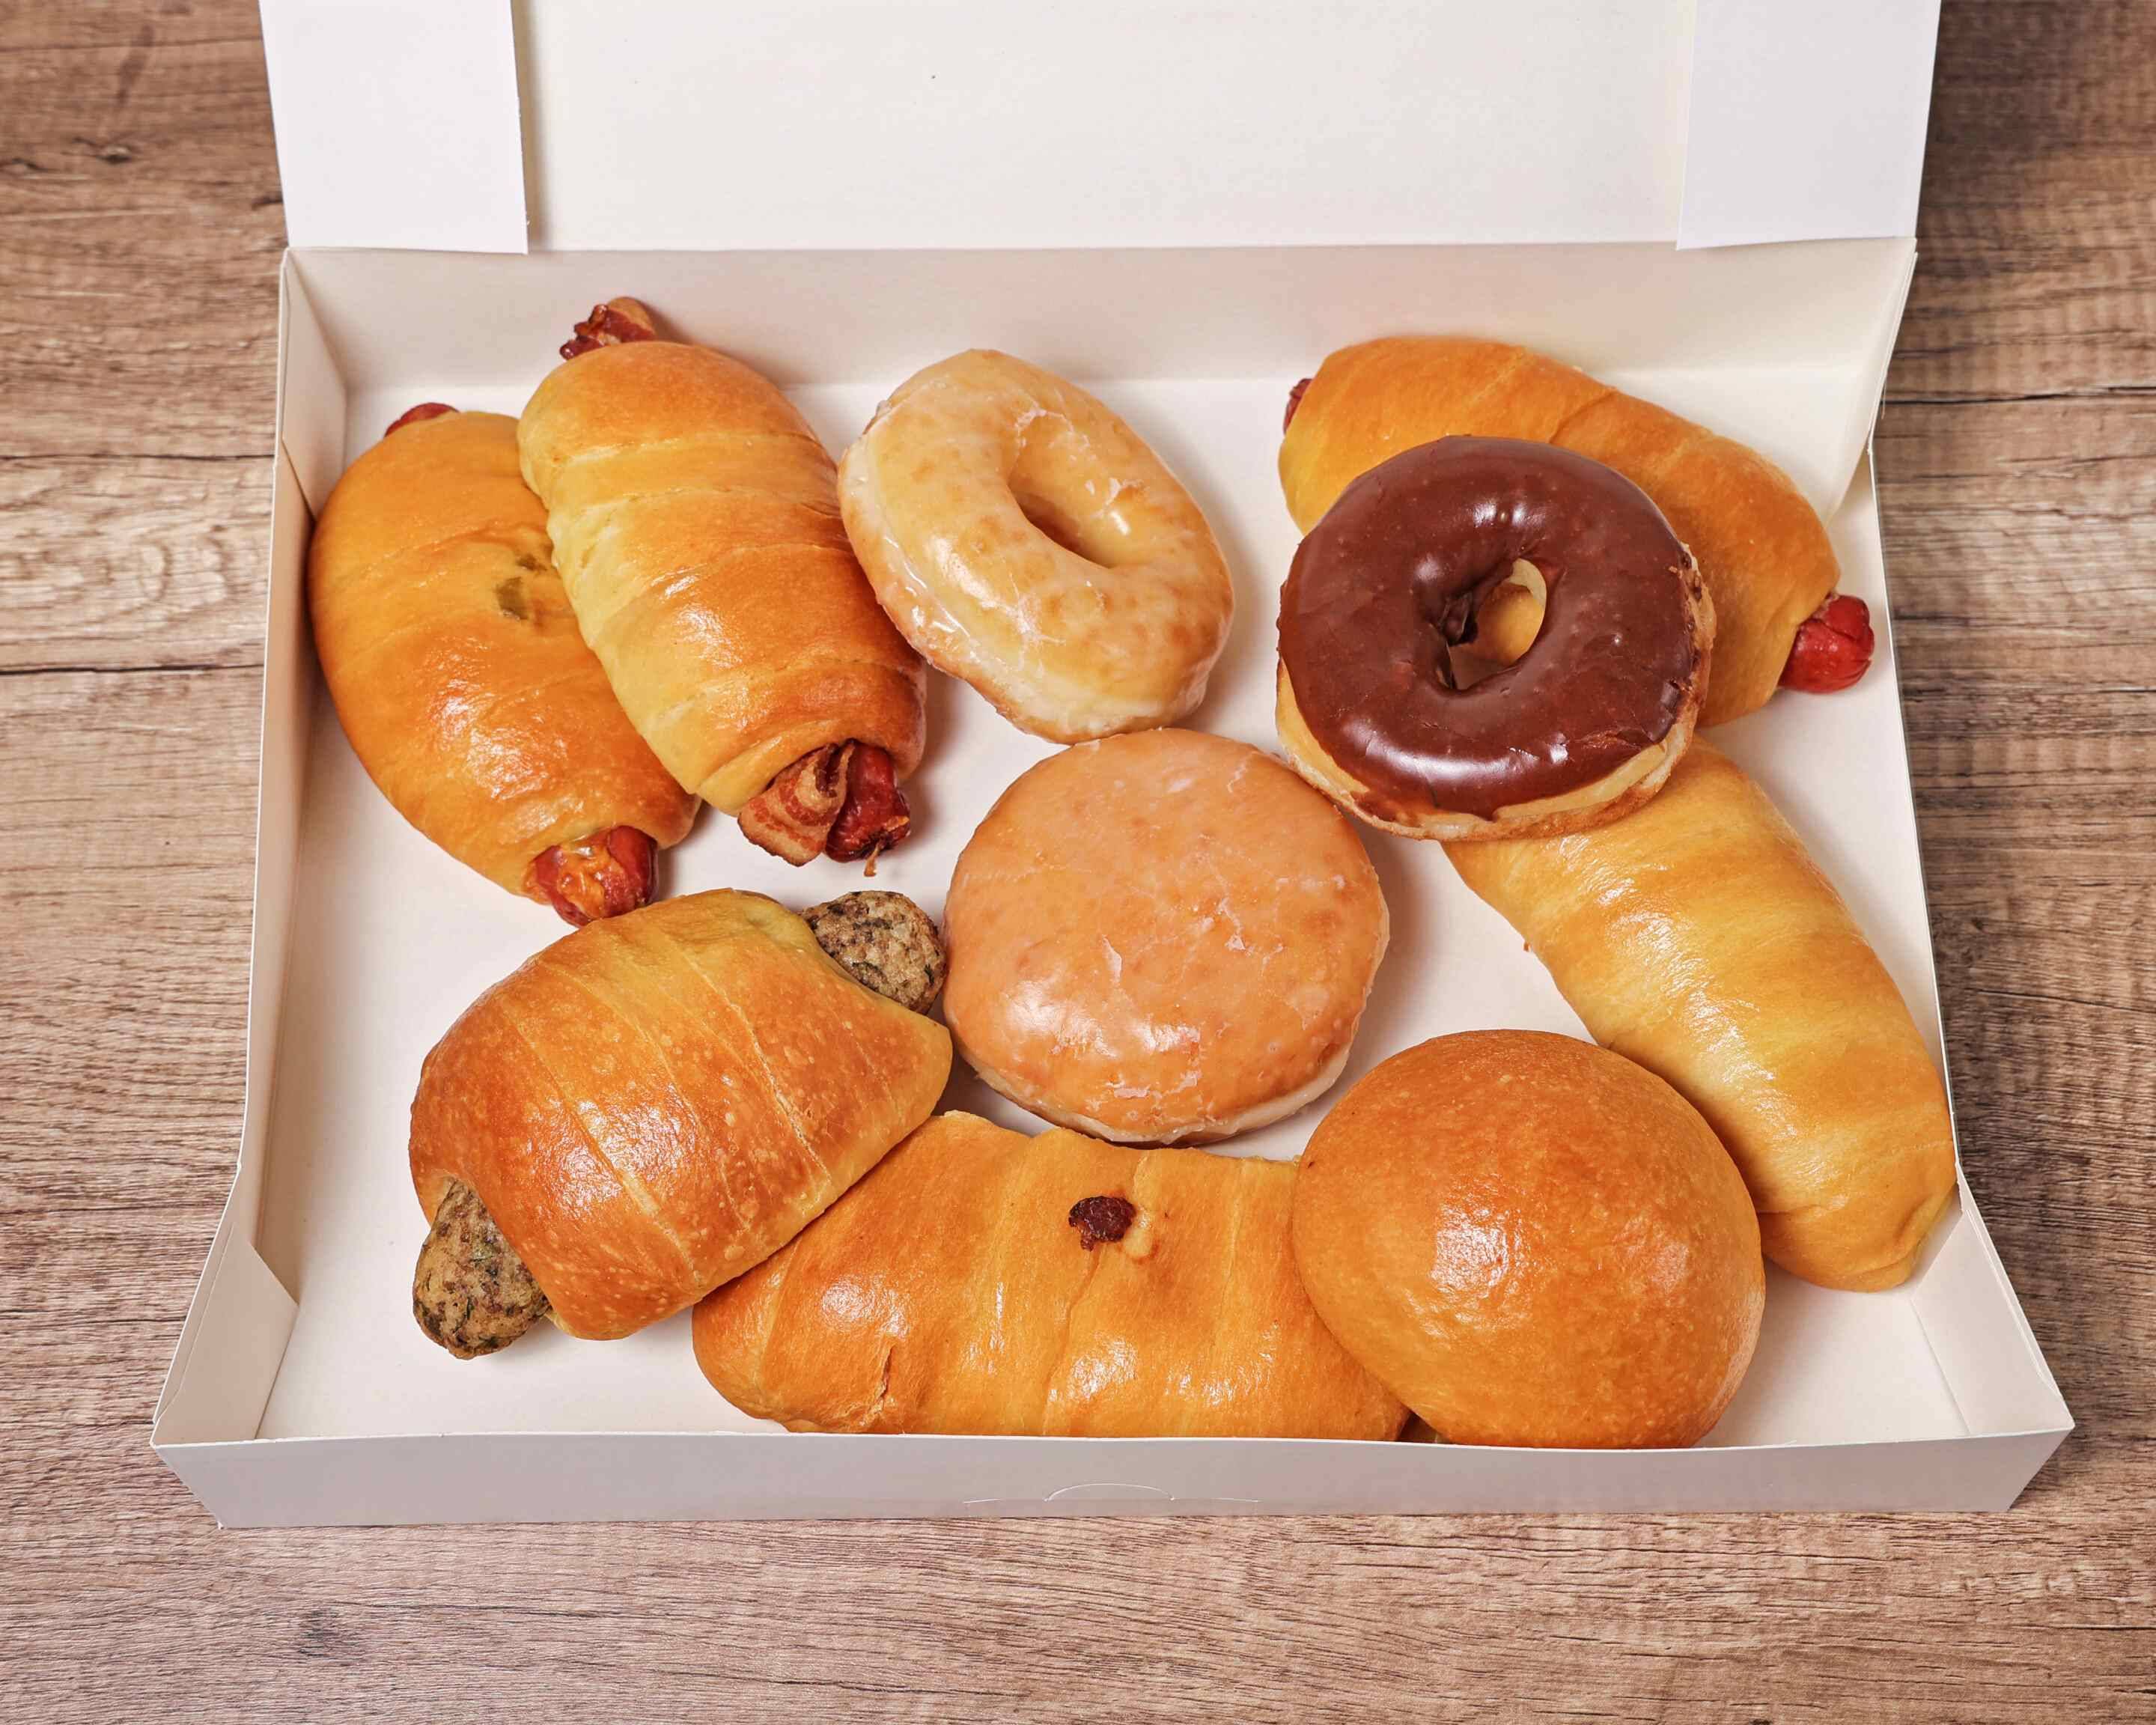 National Donut Day: Houston donut shops offer deals, specials